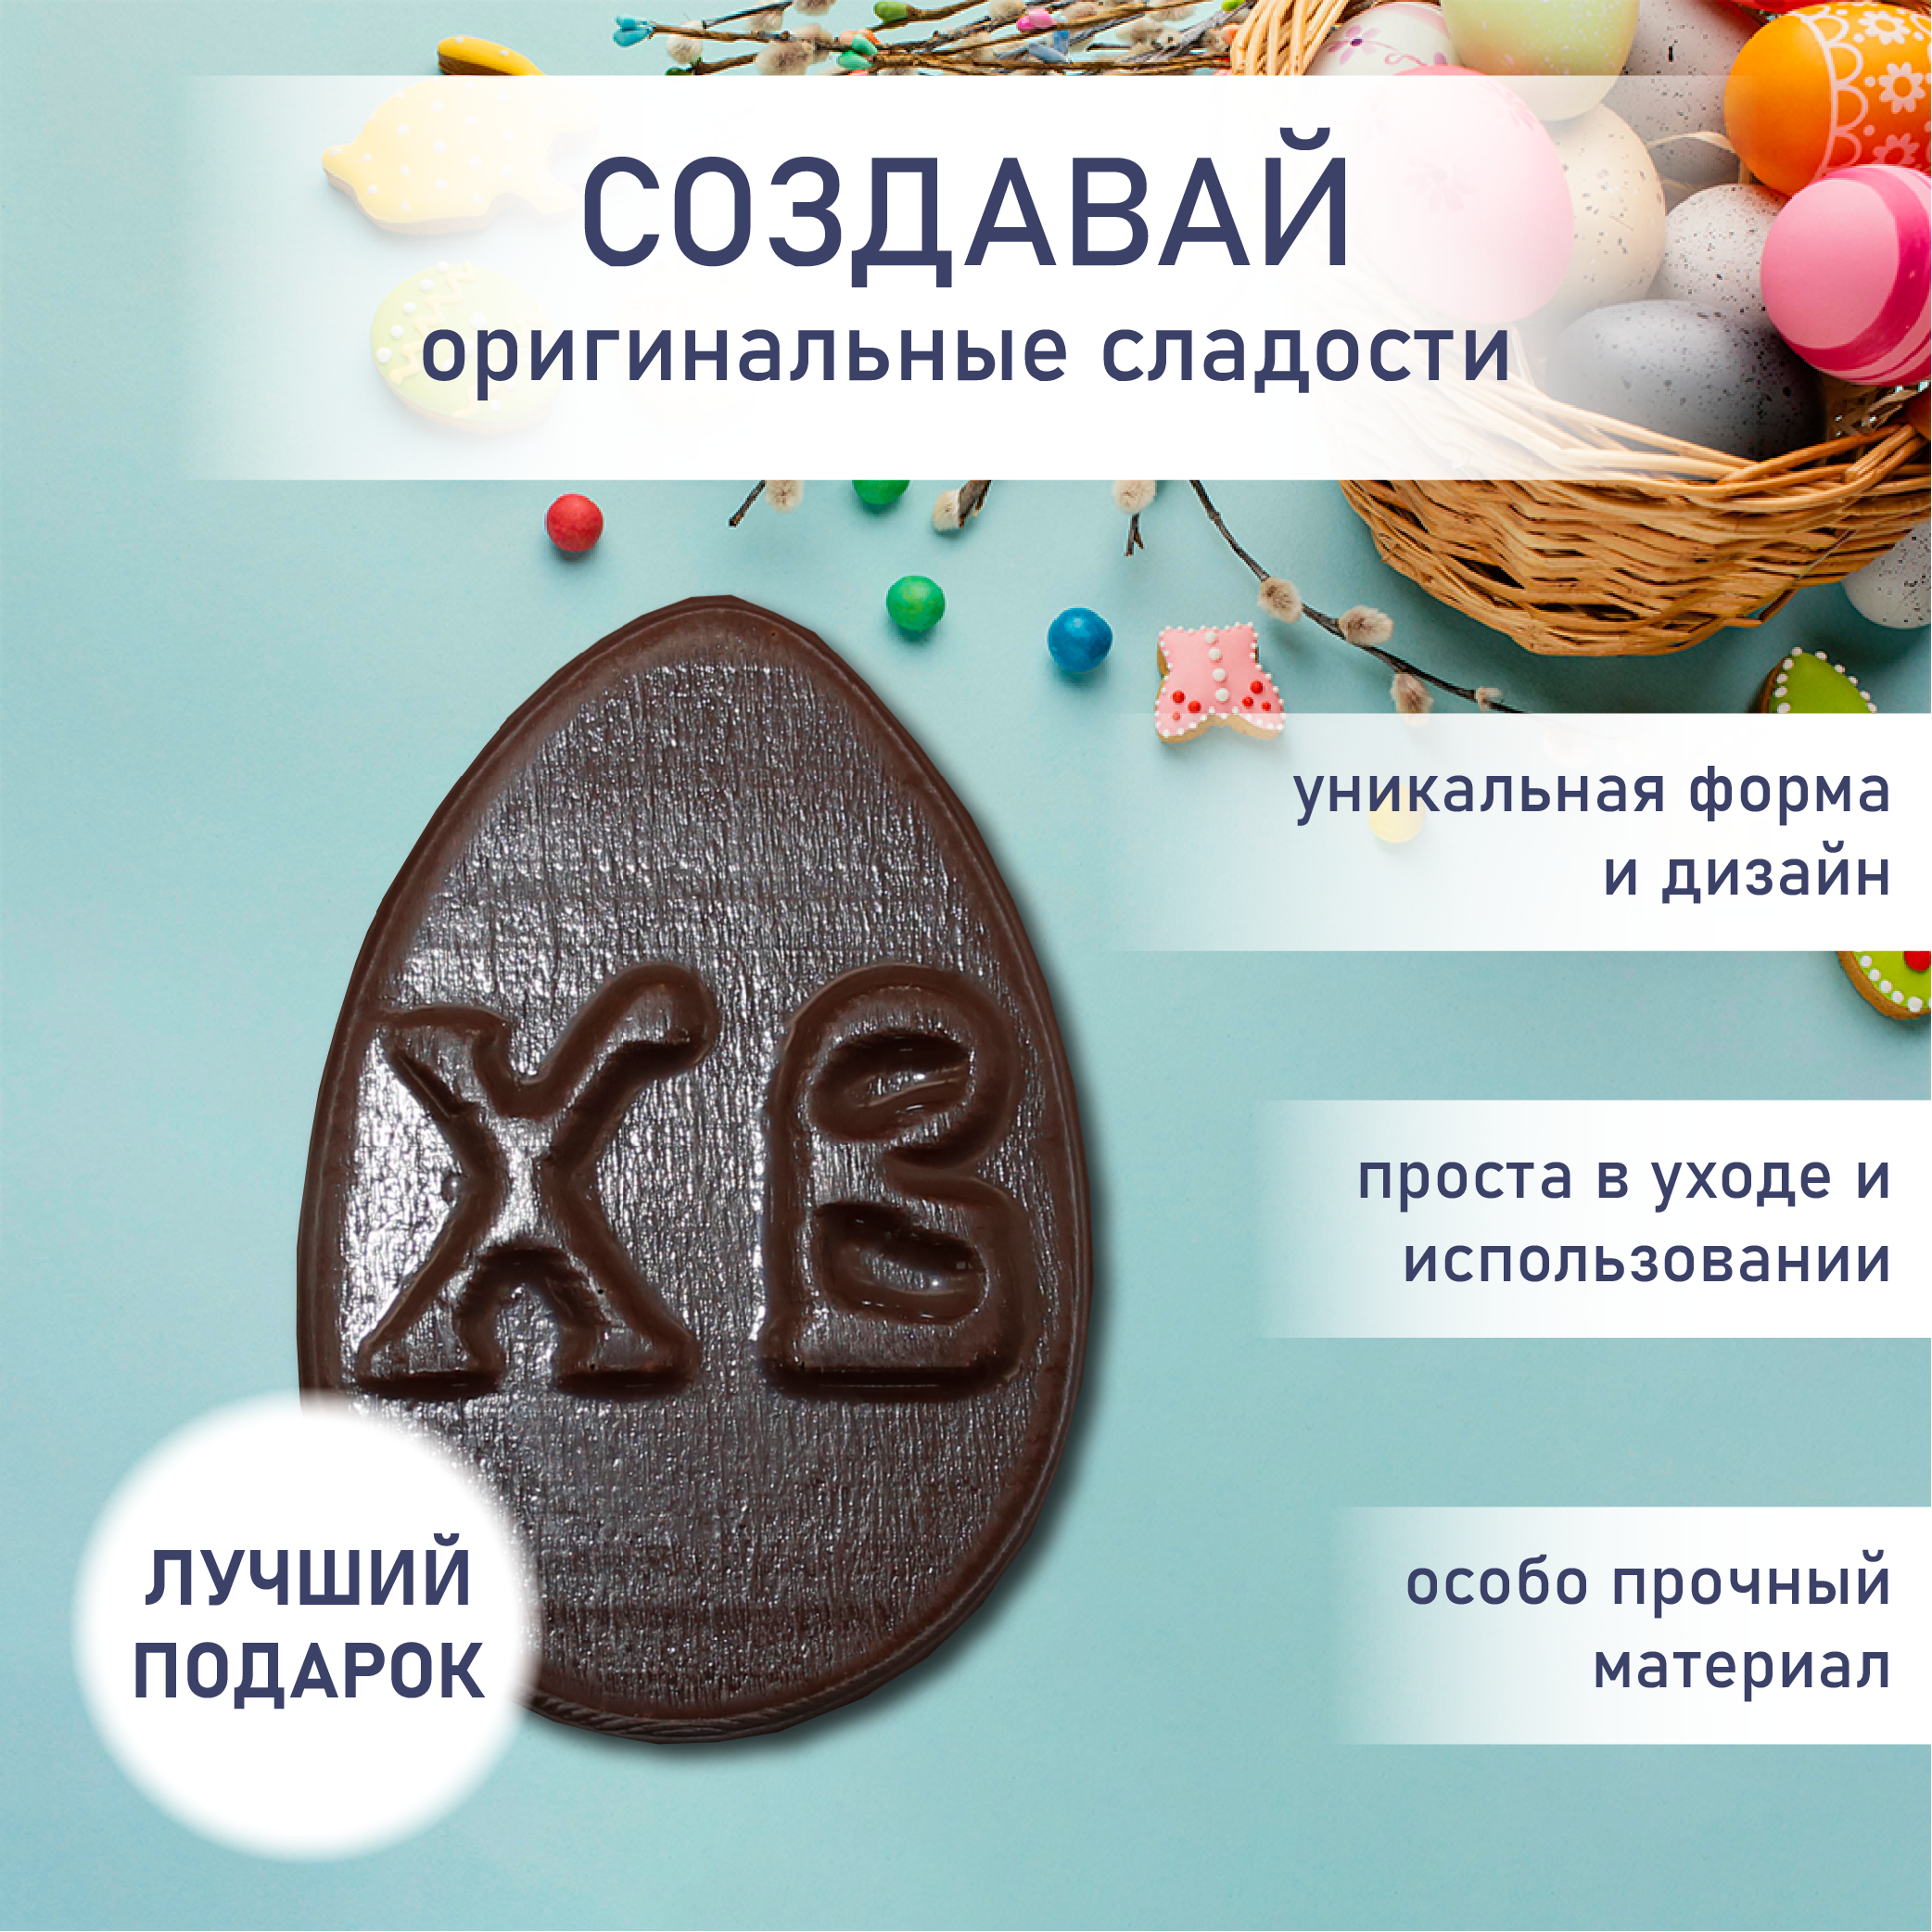 Форма для шоколада яйцо ХВ VTK